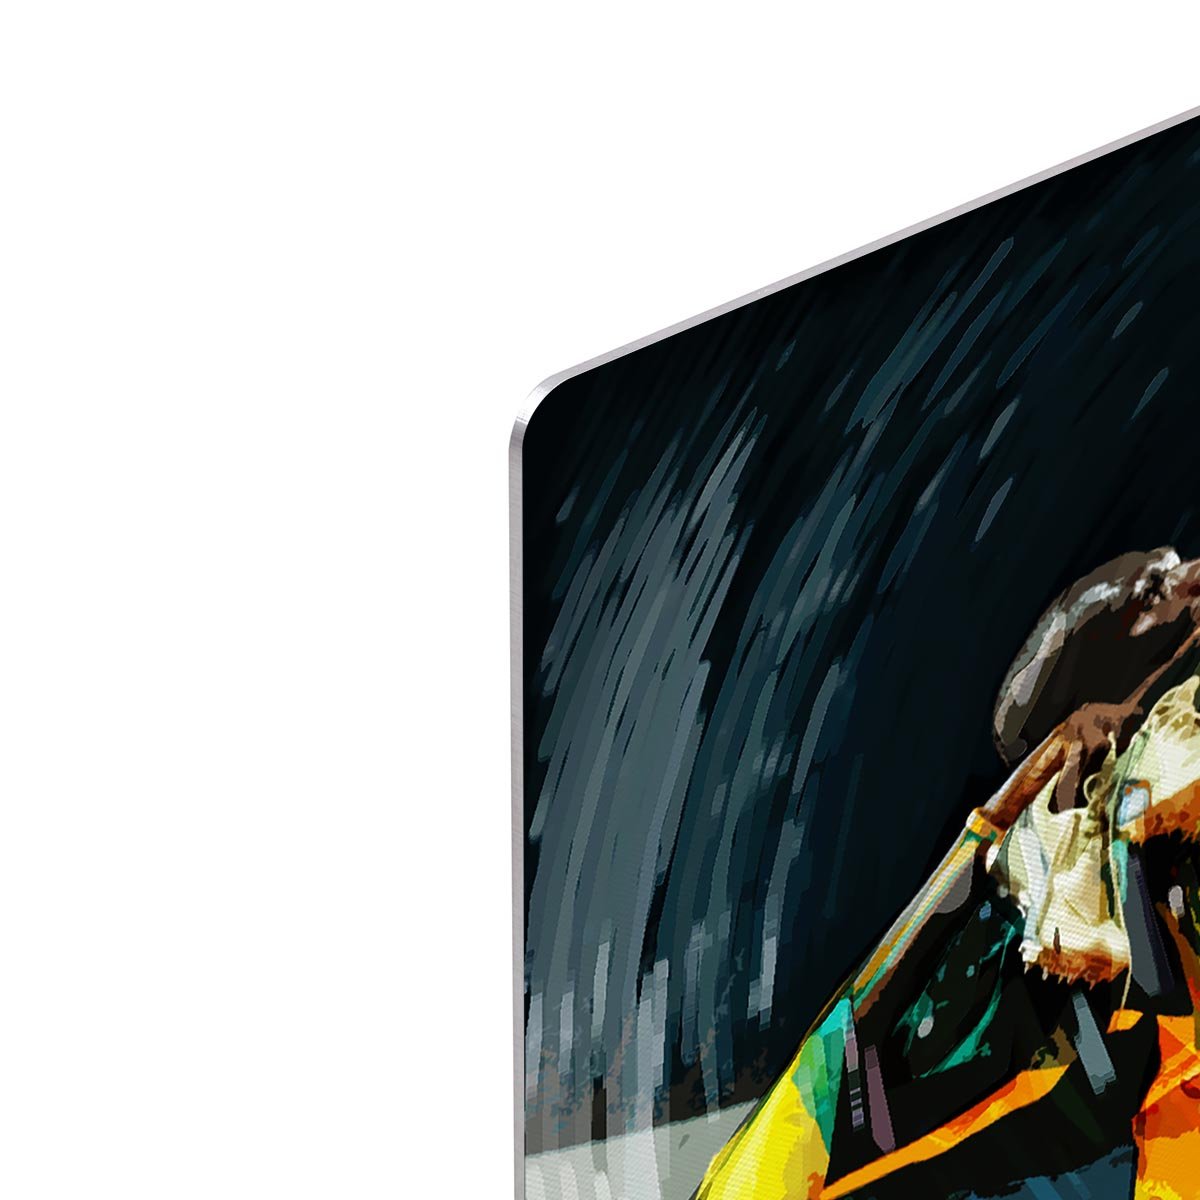 Usian Bolt Iconic Pose HD Metal Print